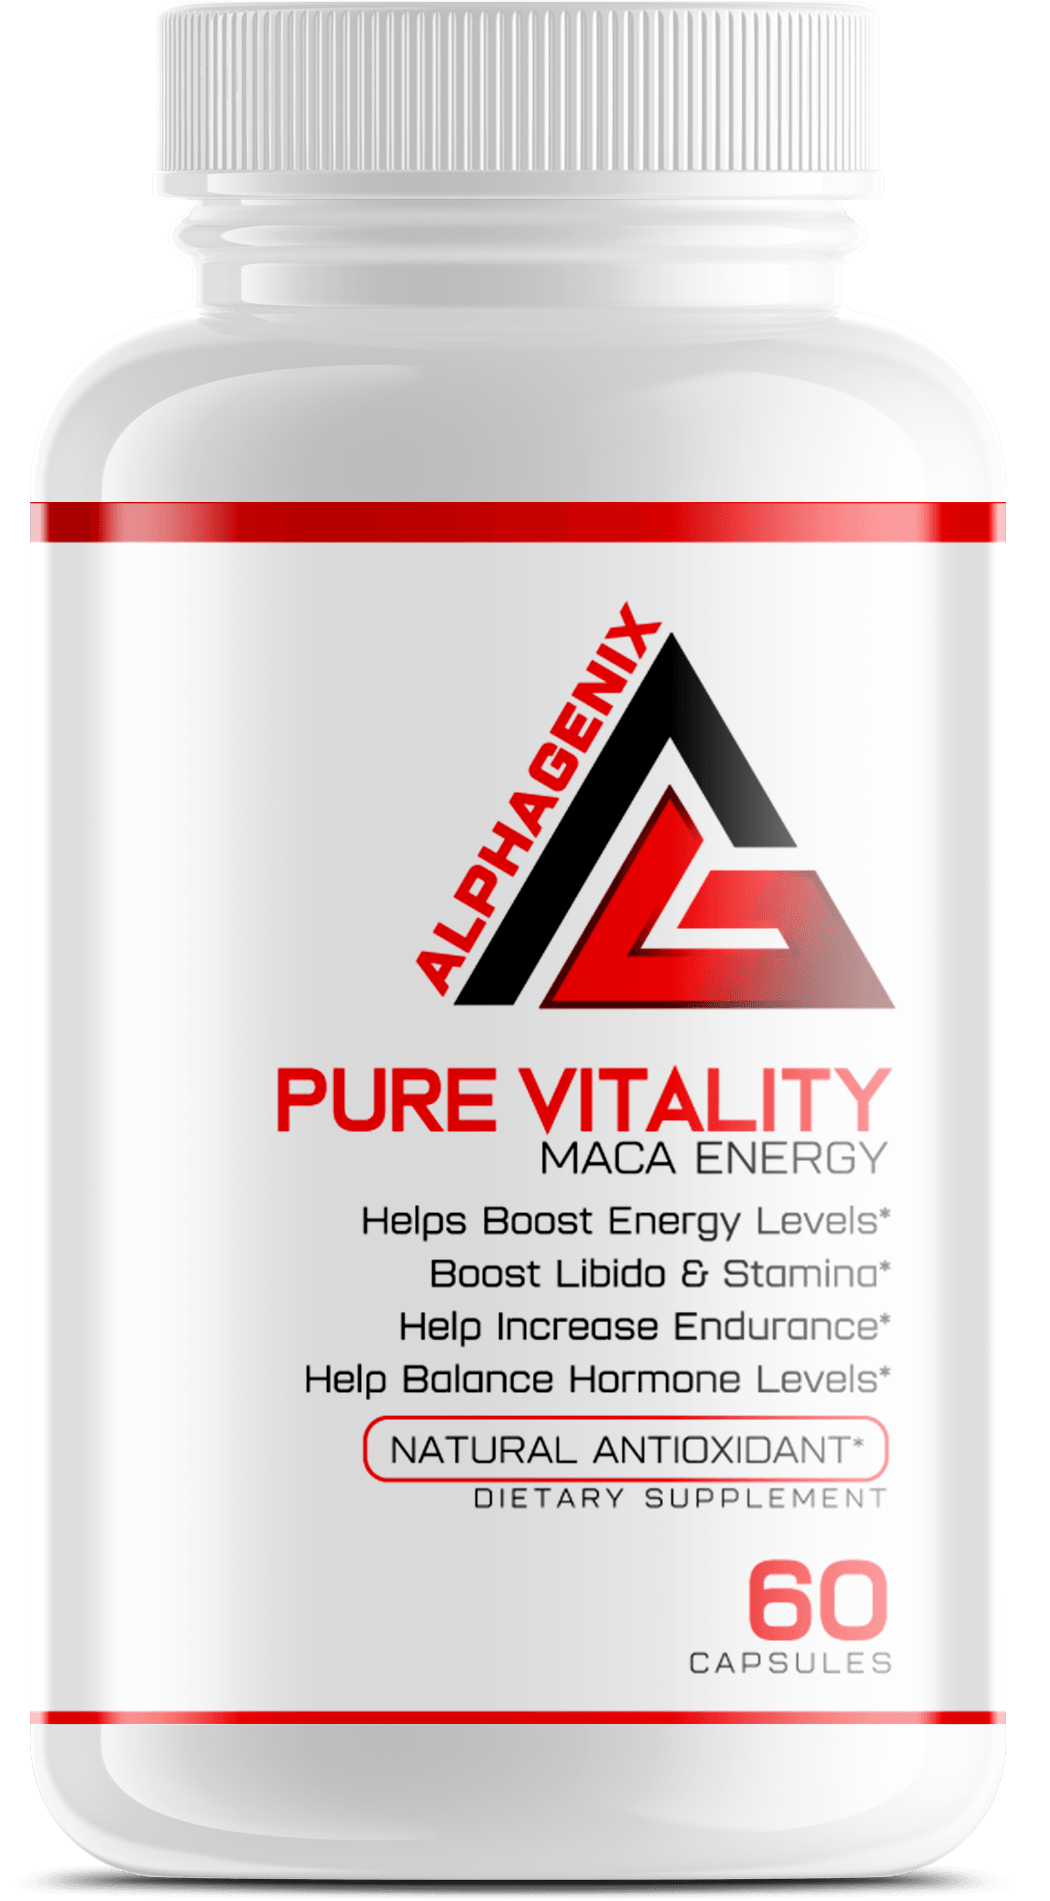 PureVitality - Maca Energy To Help Balance Hormone Levels and Boost Libido & Stamina - AlphaGenix